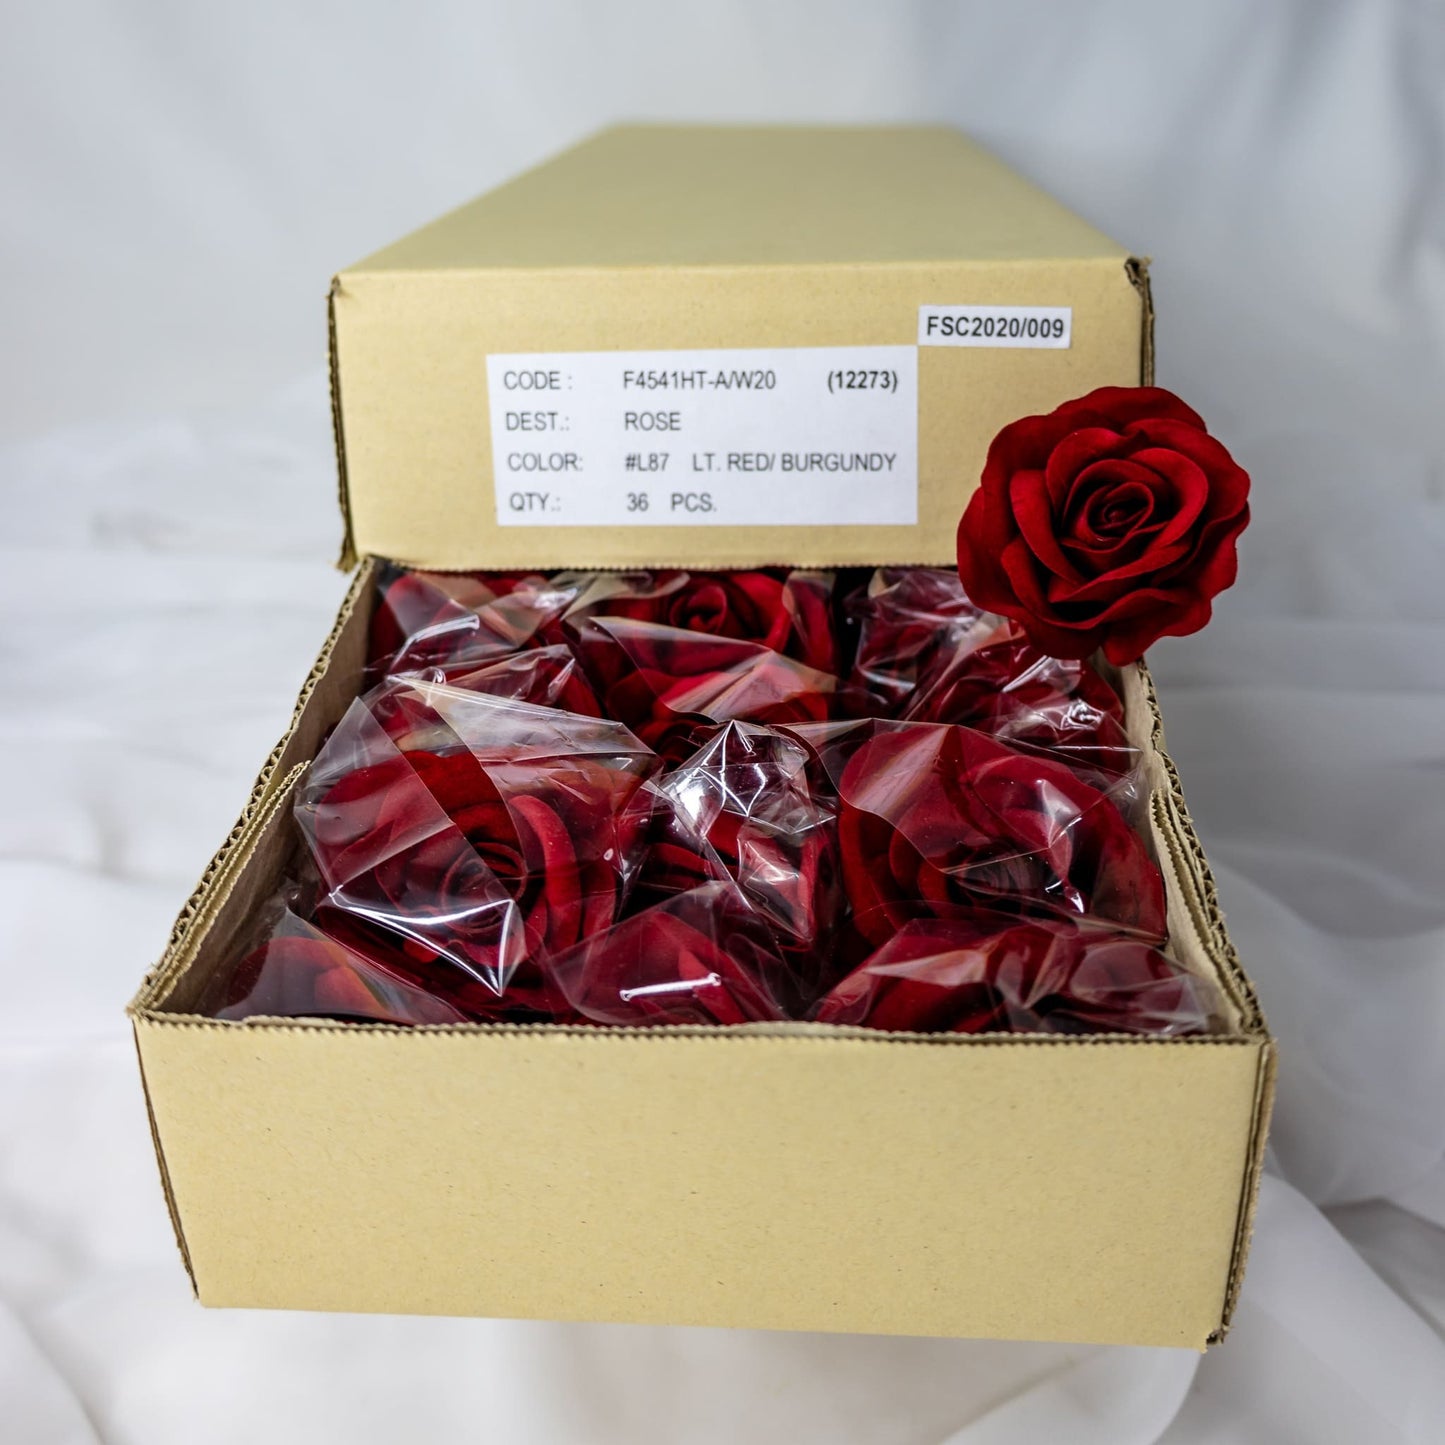 artificial Red Velveteen Bloom roses inside the box